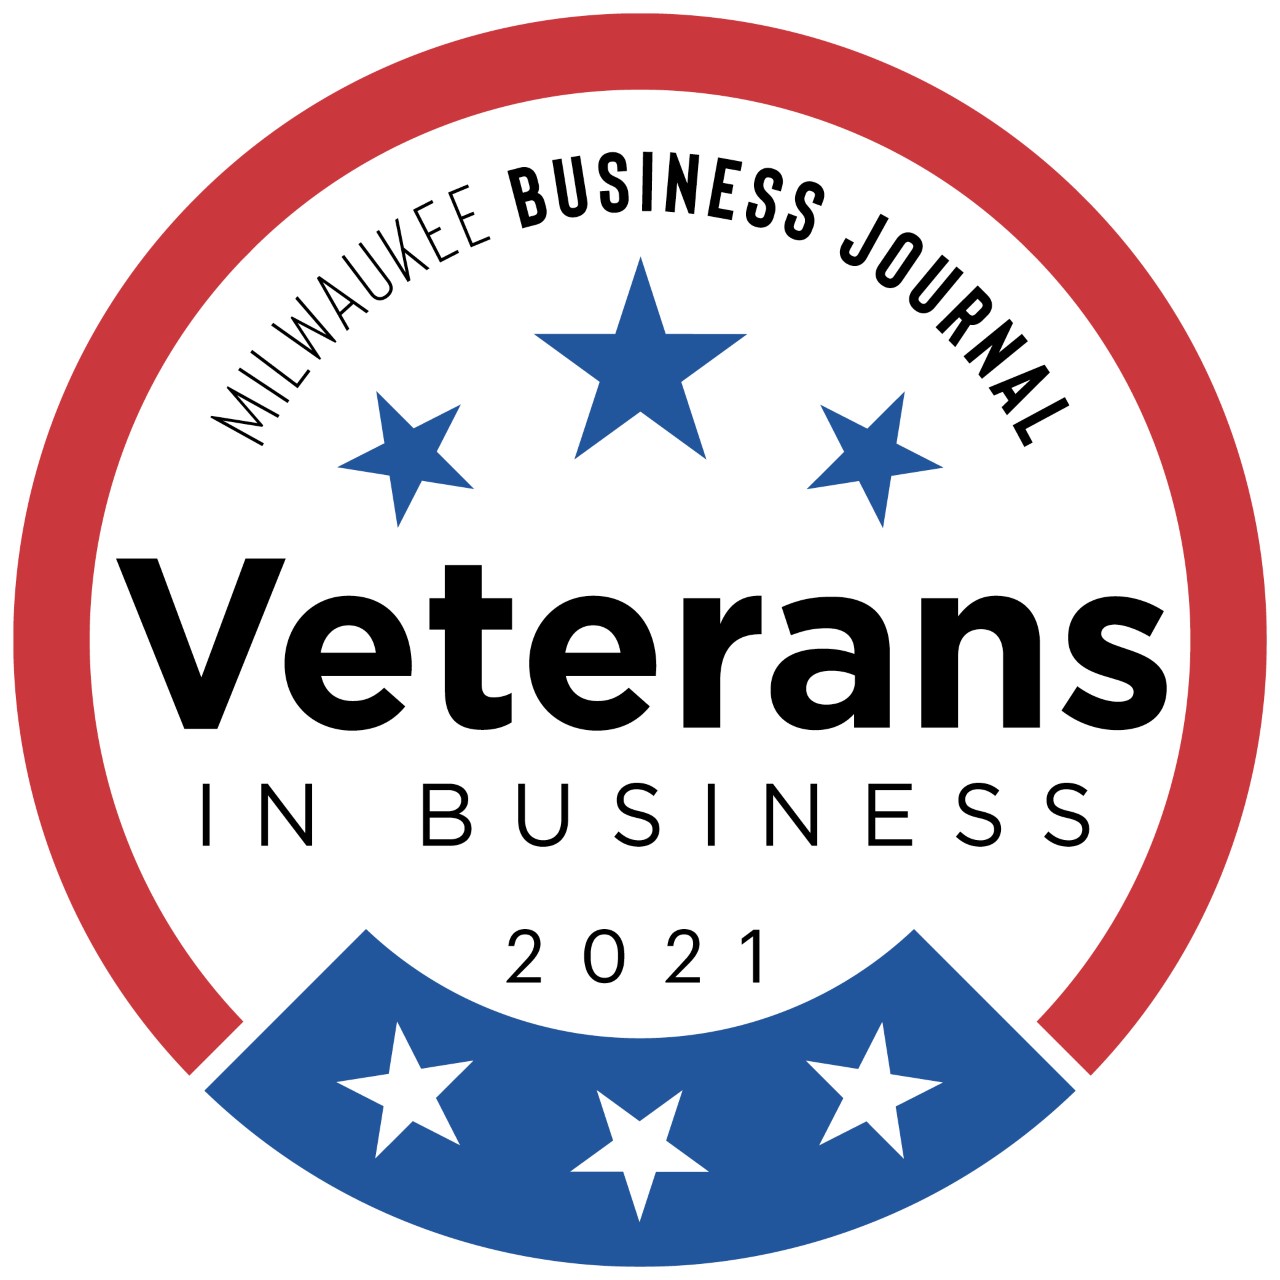 Veterans in Business award